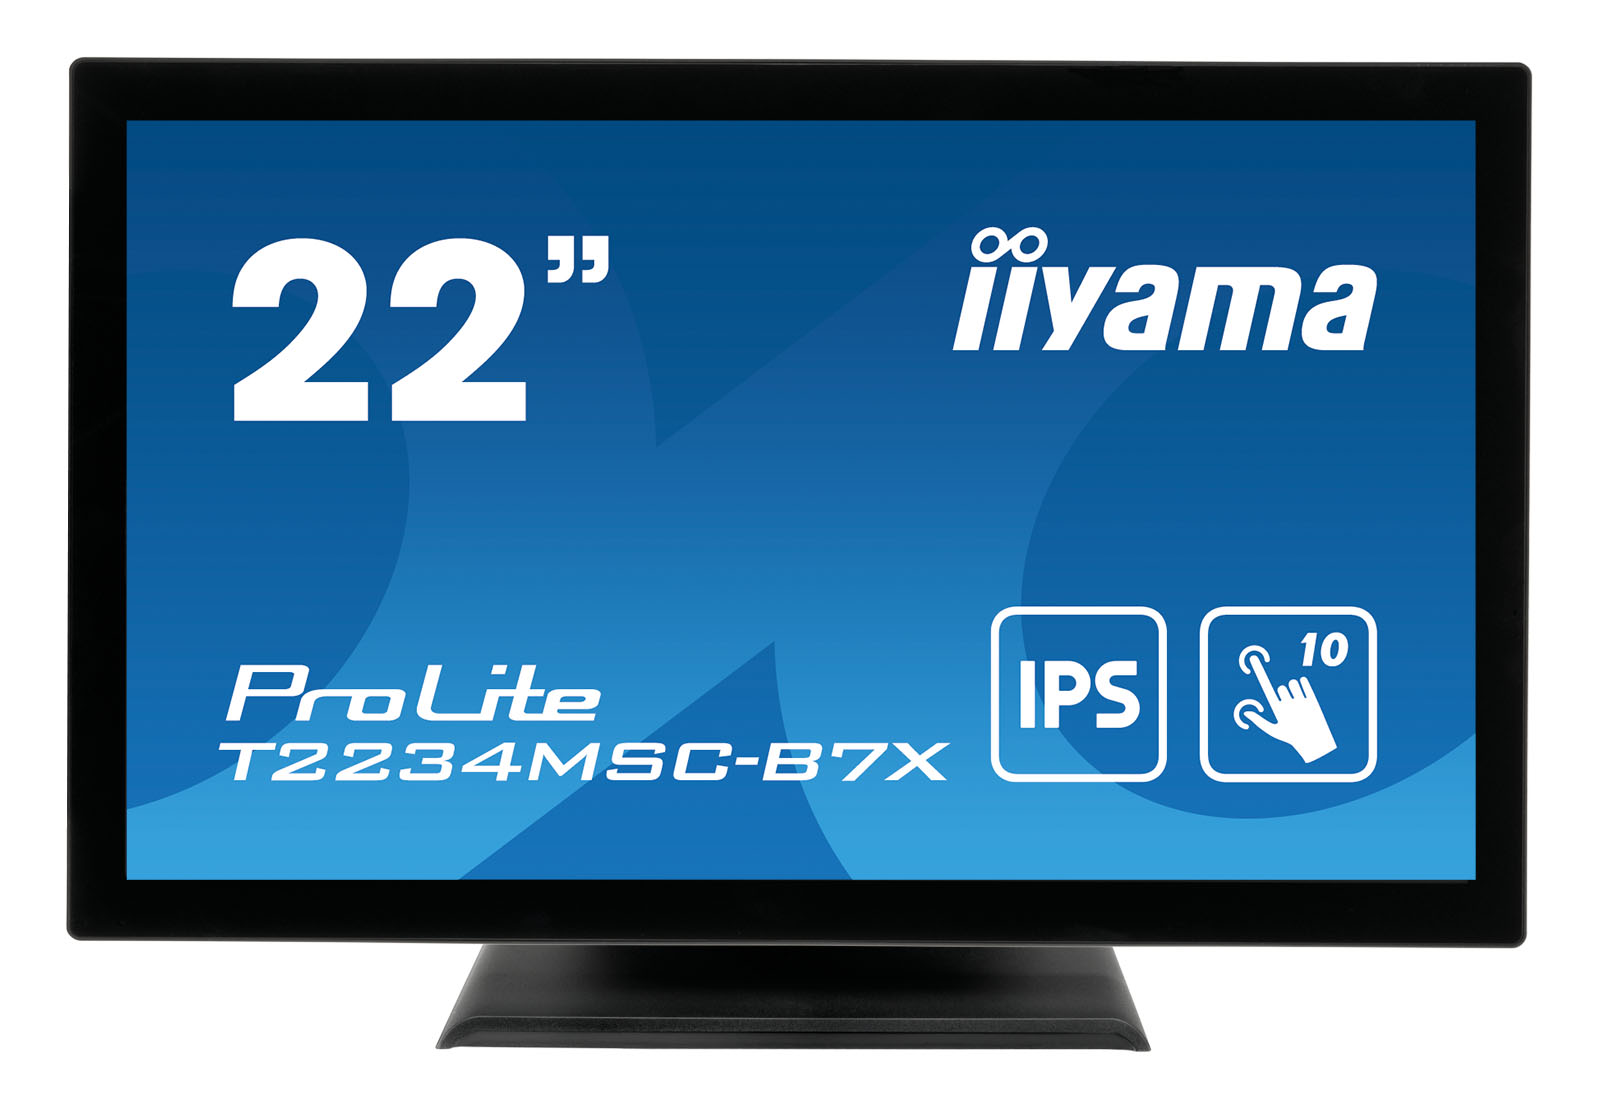 Iiyama ProLite T2234MSC-B7X | 22" (55cm)